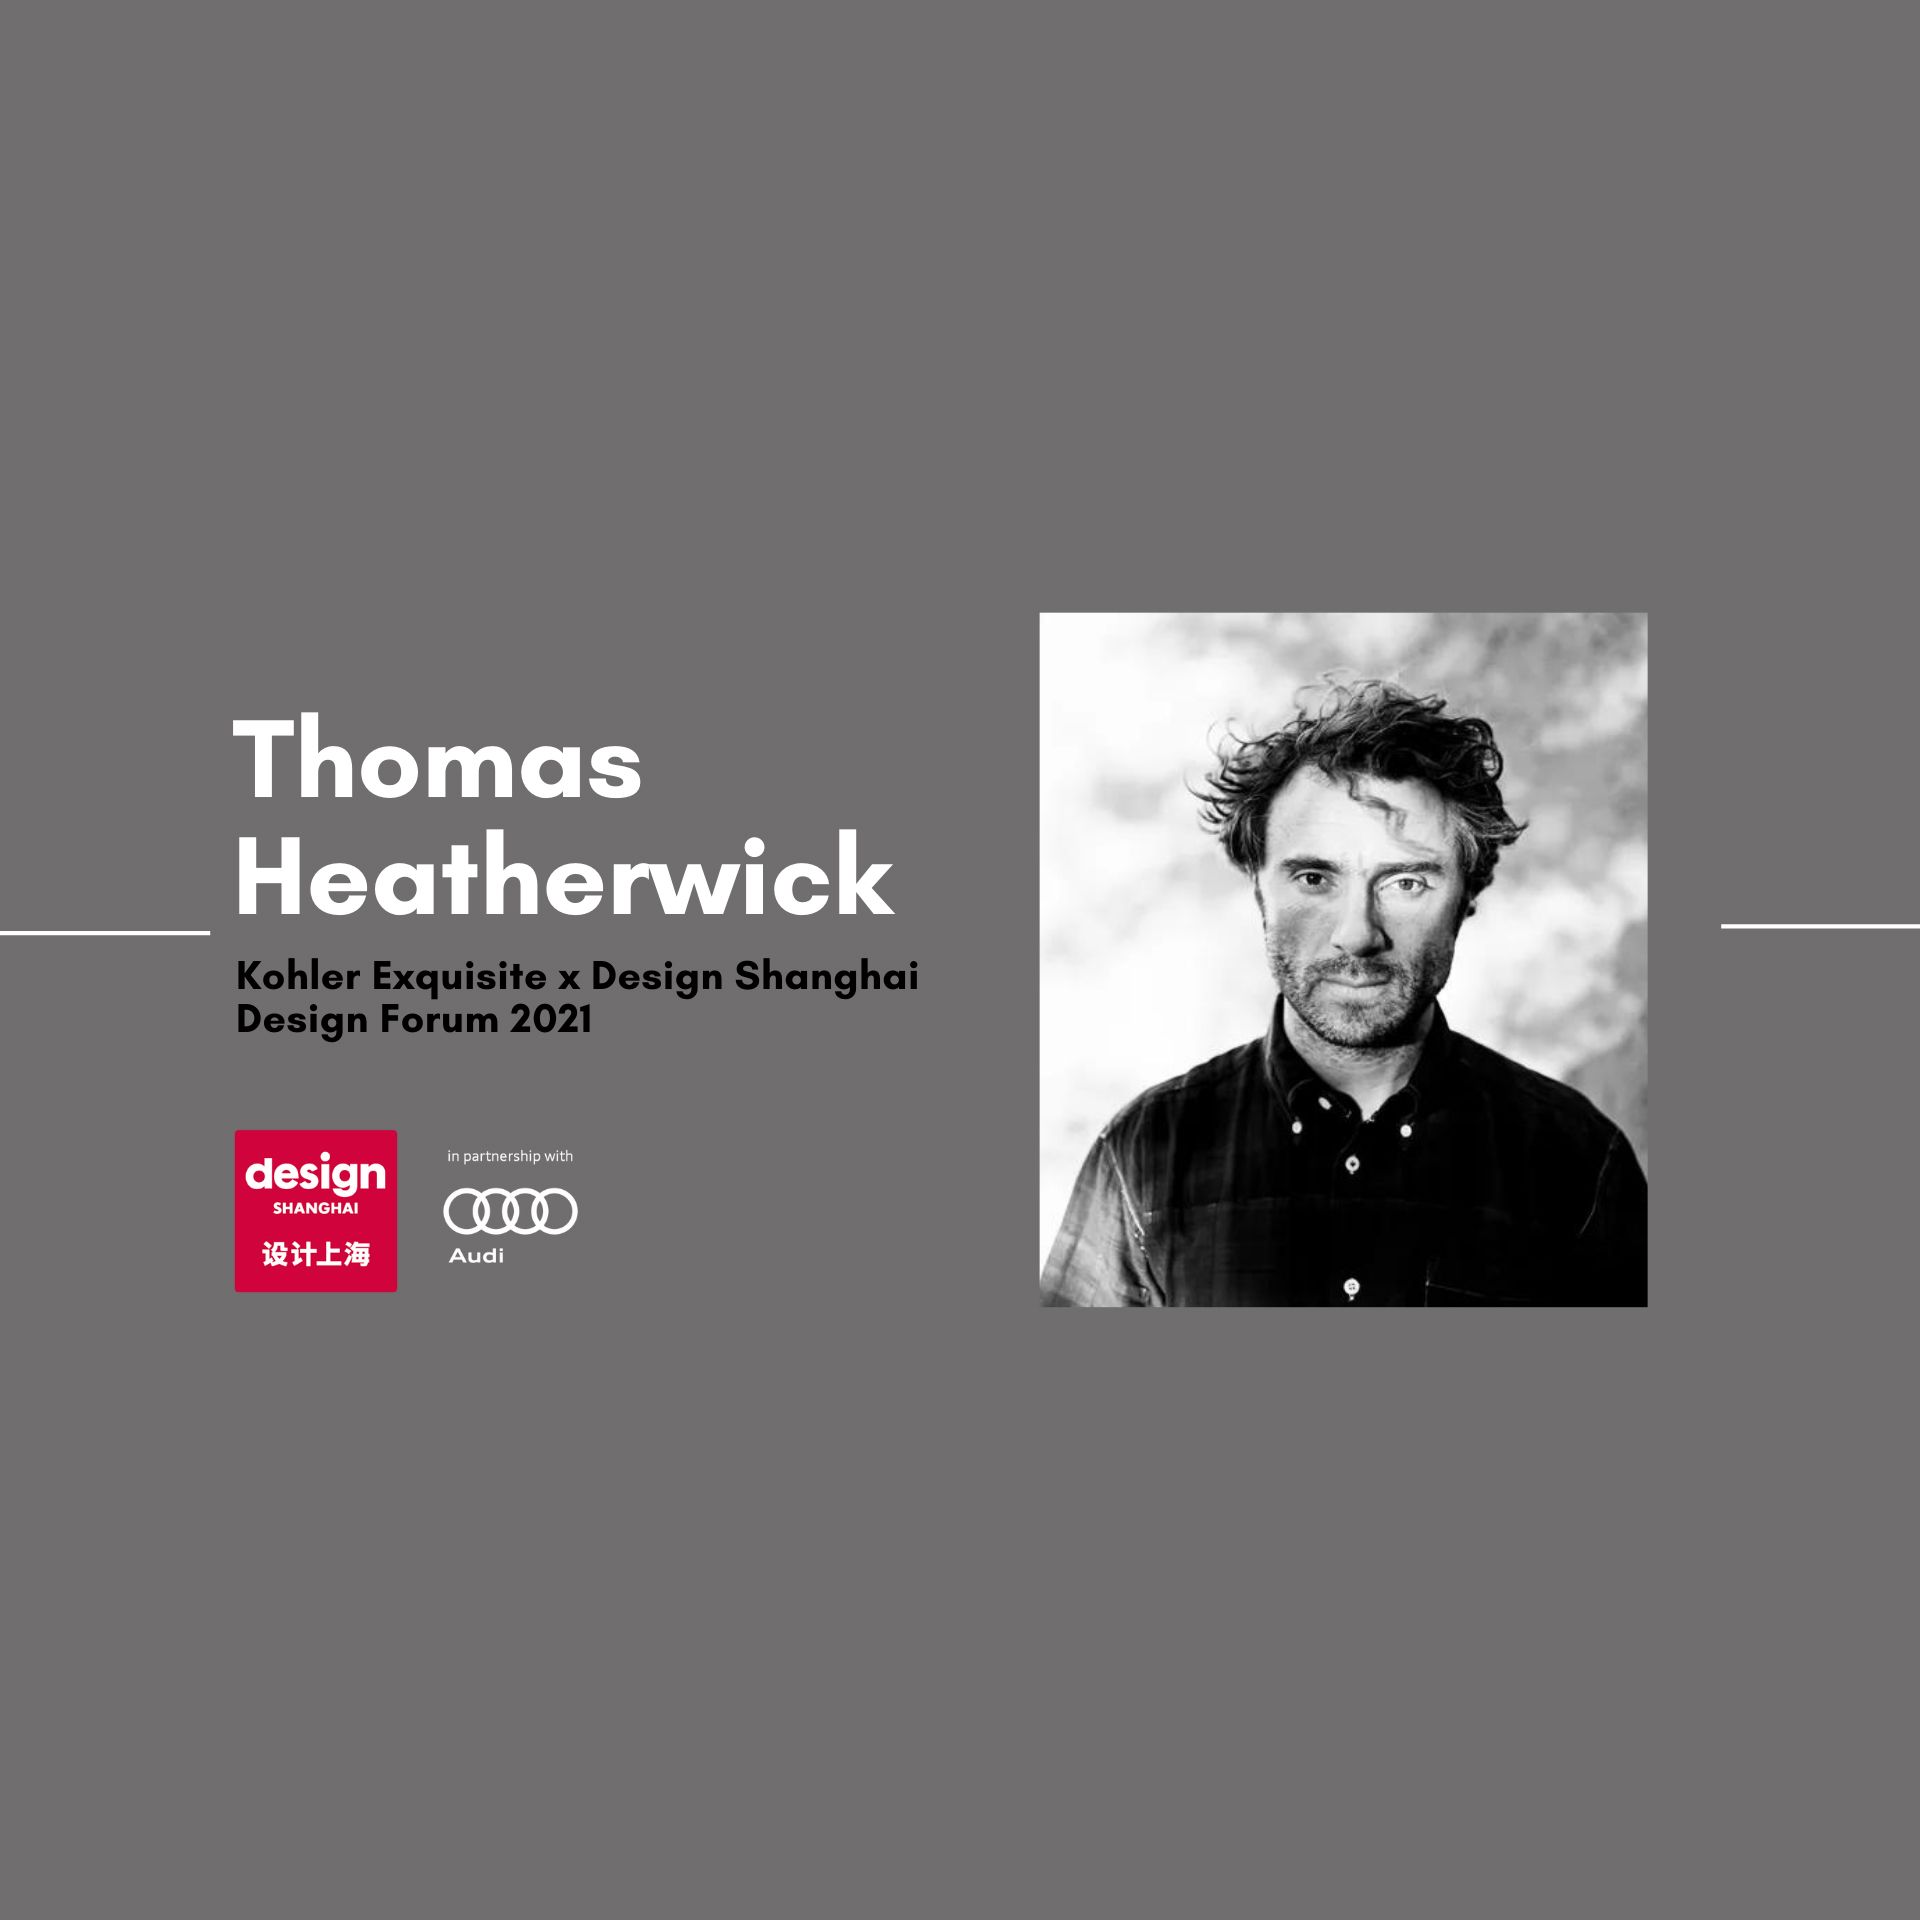 THOMAS HEATHERWICK: 设计的情感